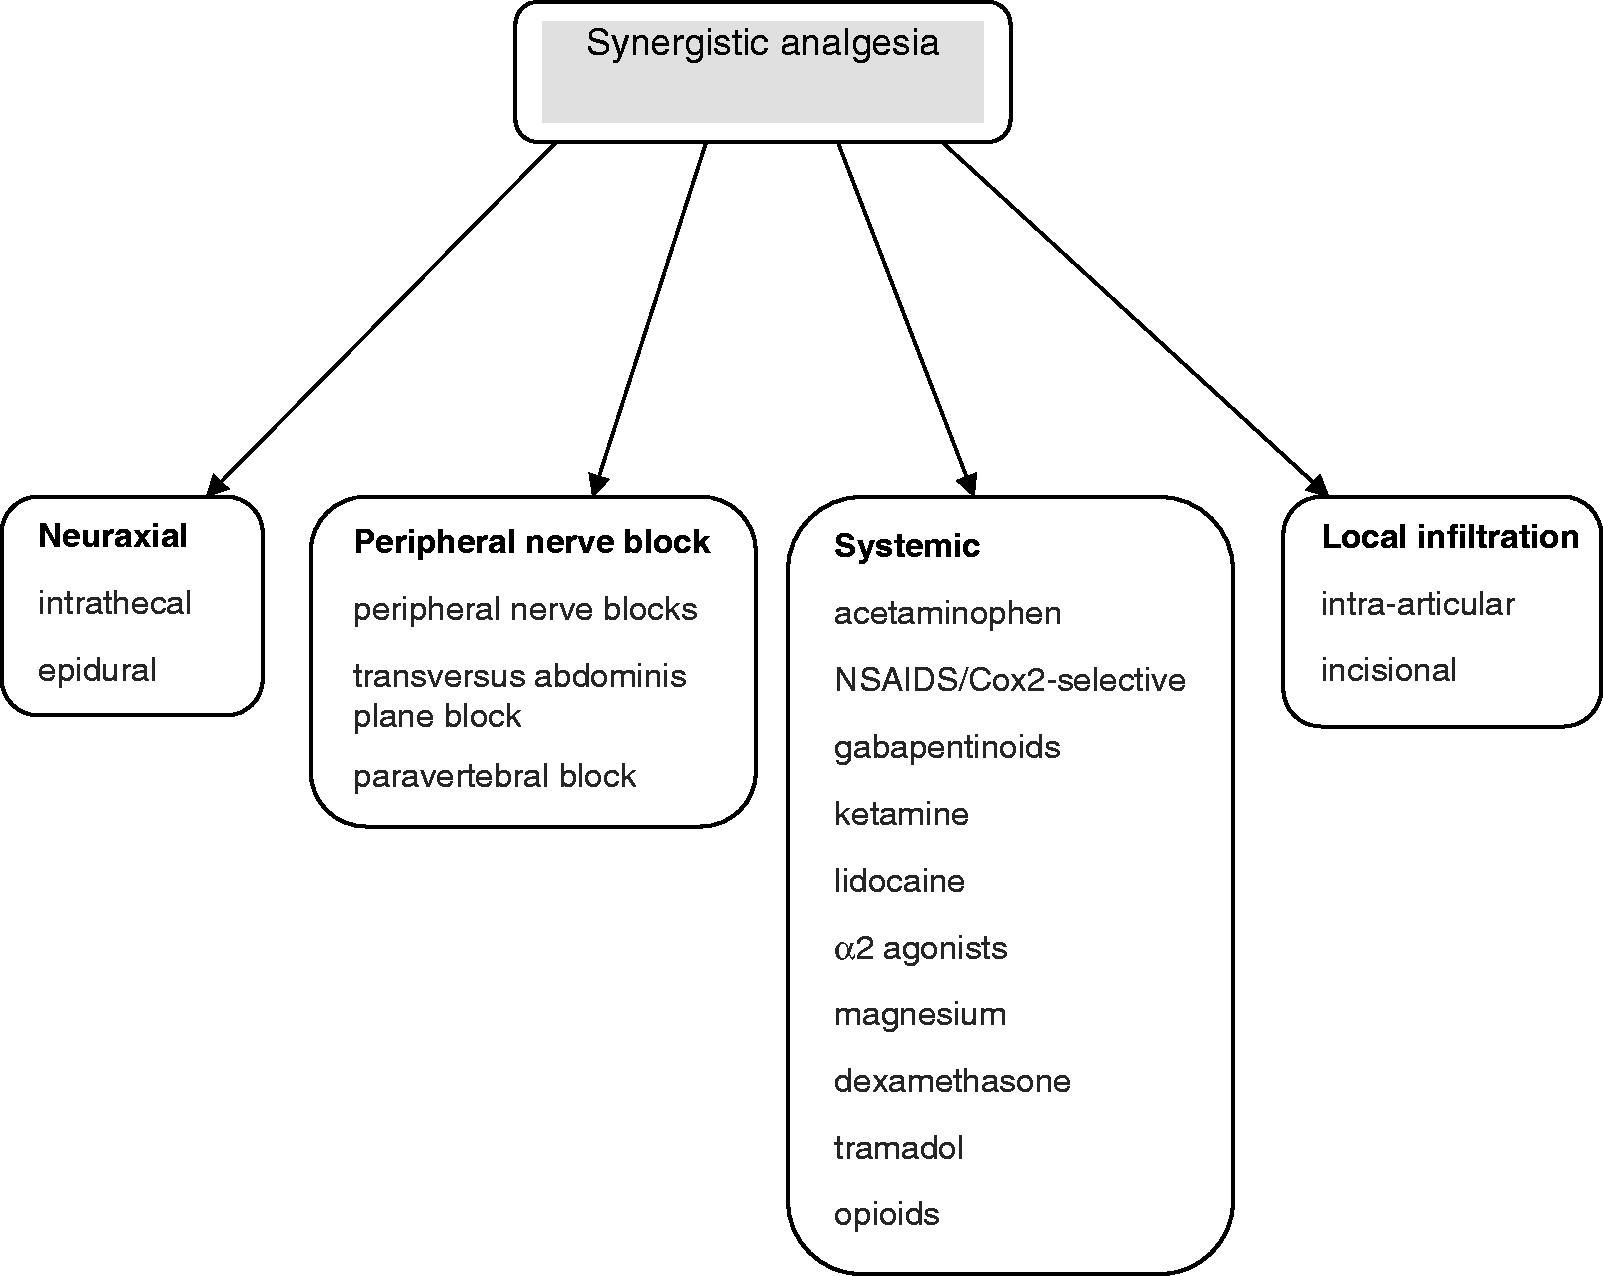 Figure 1. Basic components of synergistic analgesic regimensCitation91.